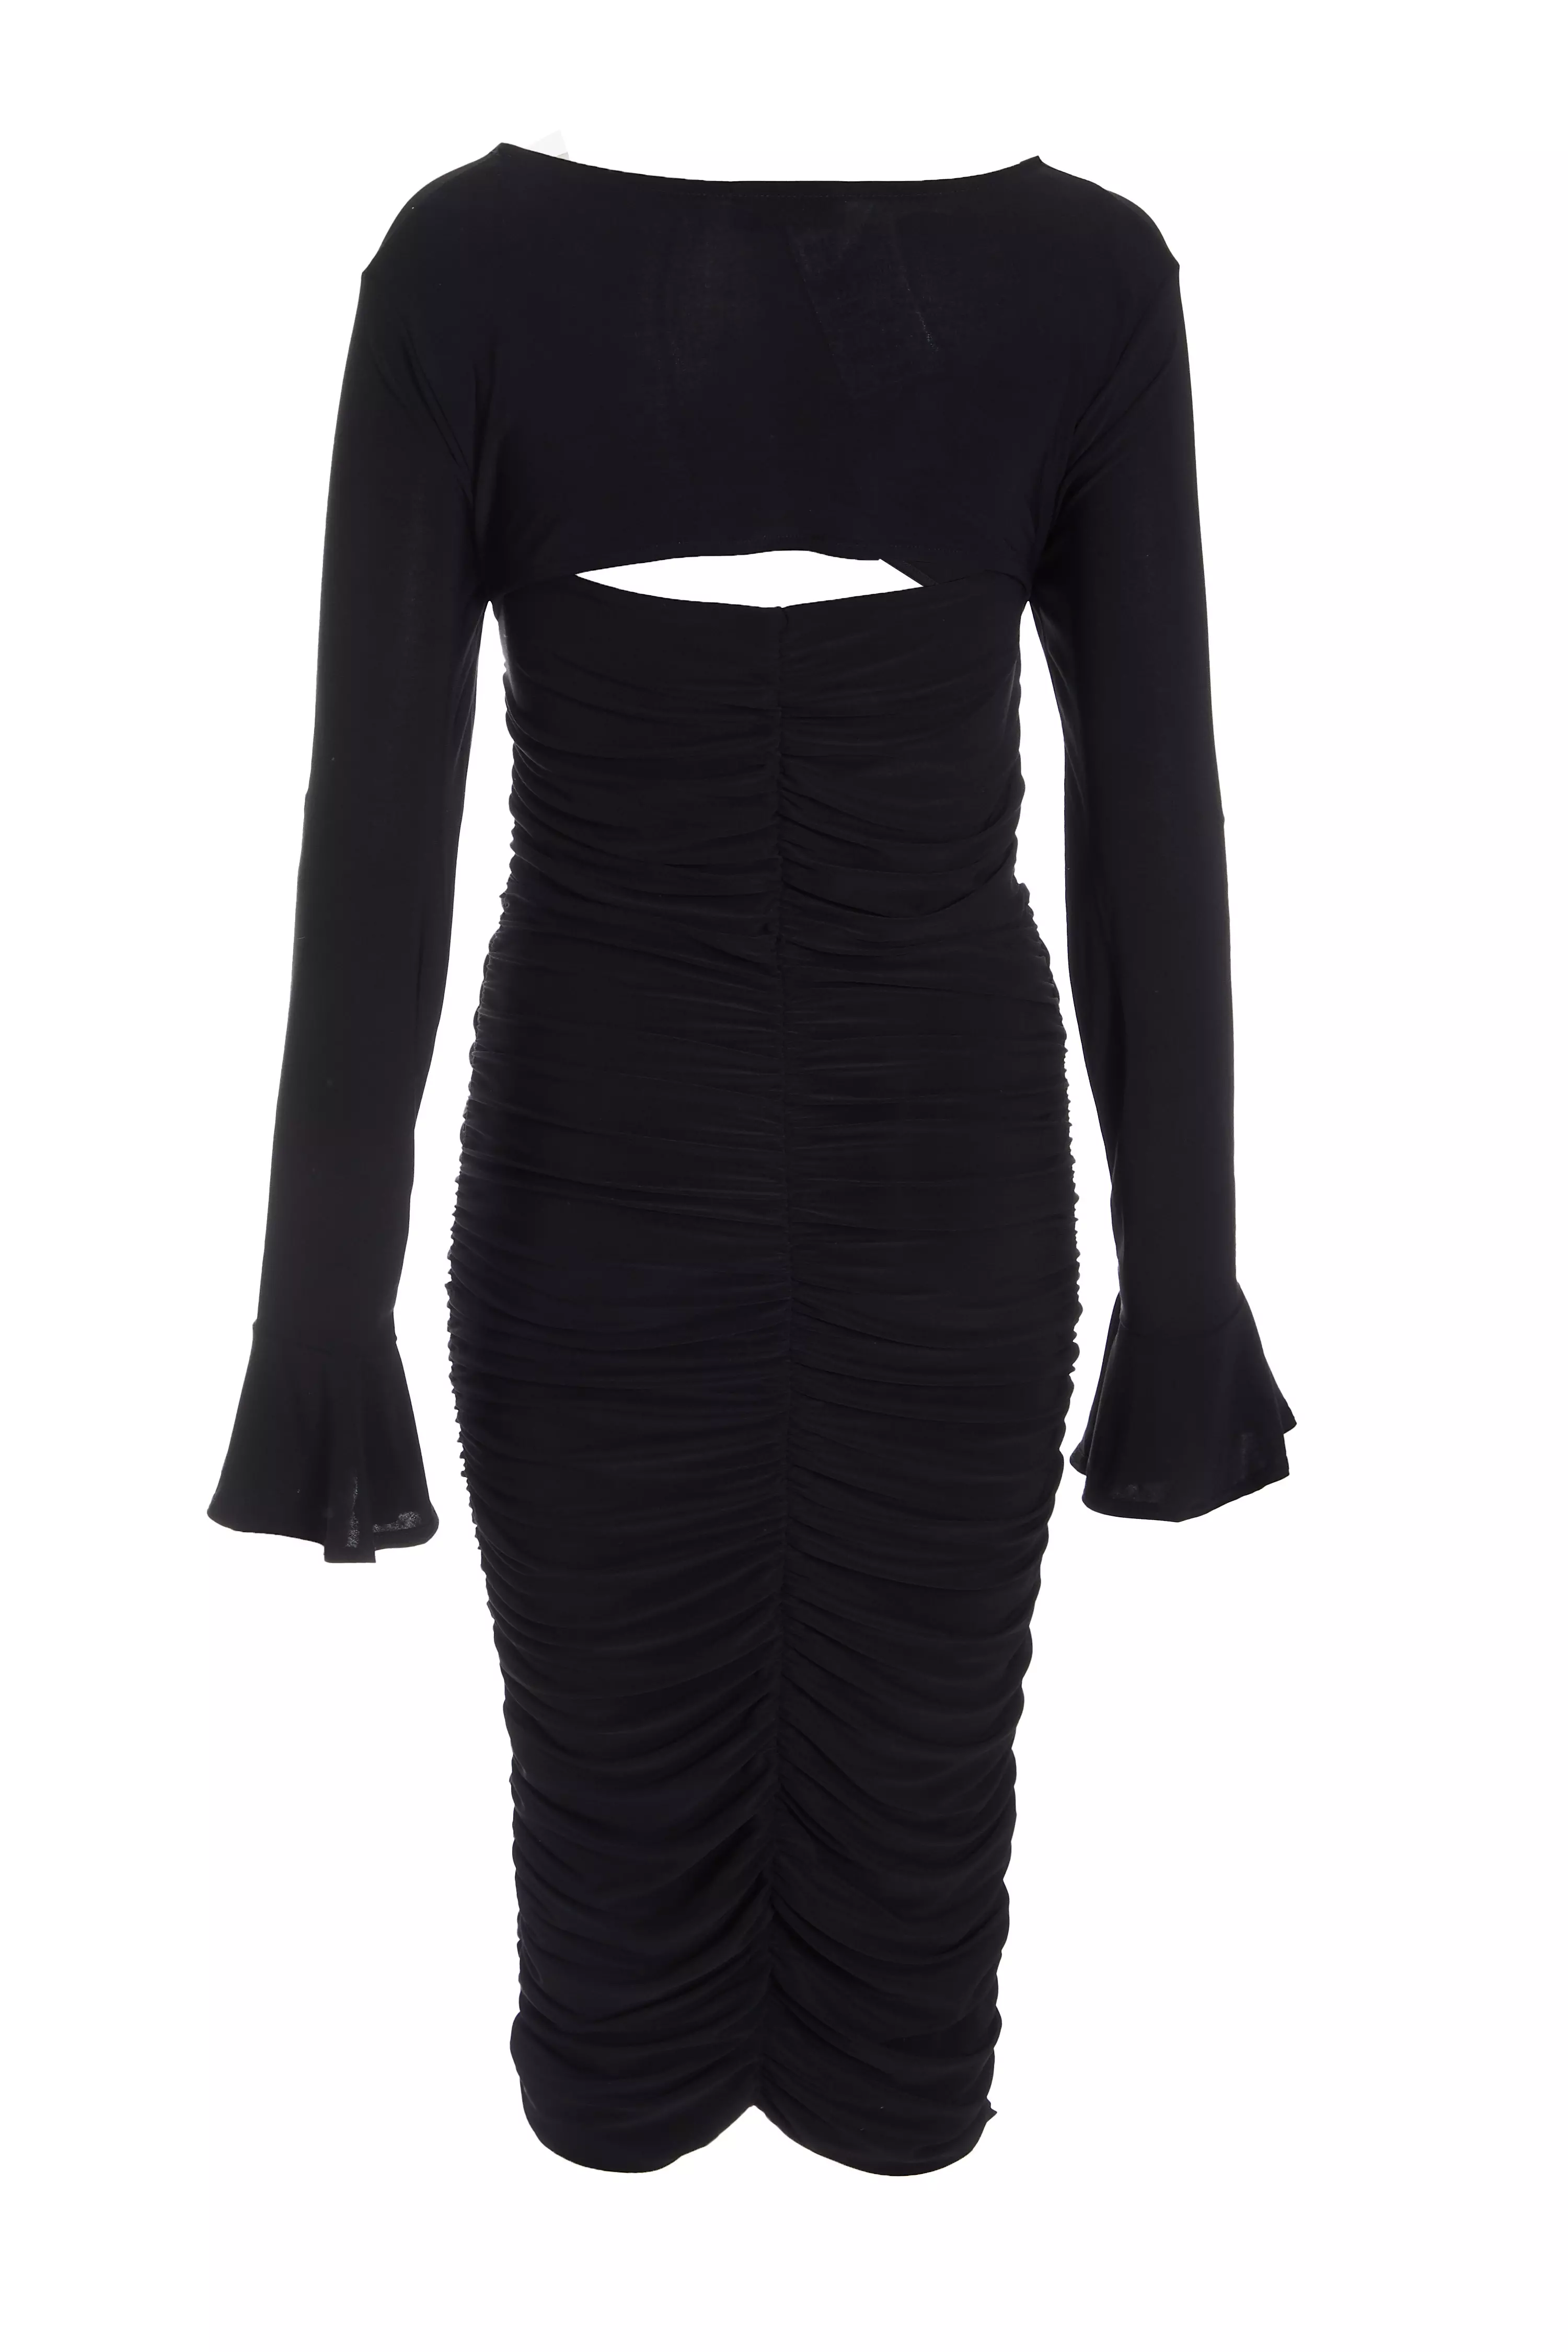 Black Knot Ruched Bodycon Midi Dress - QUIZ Clothing